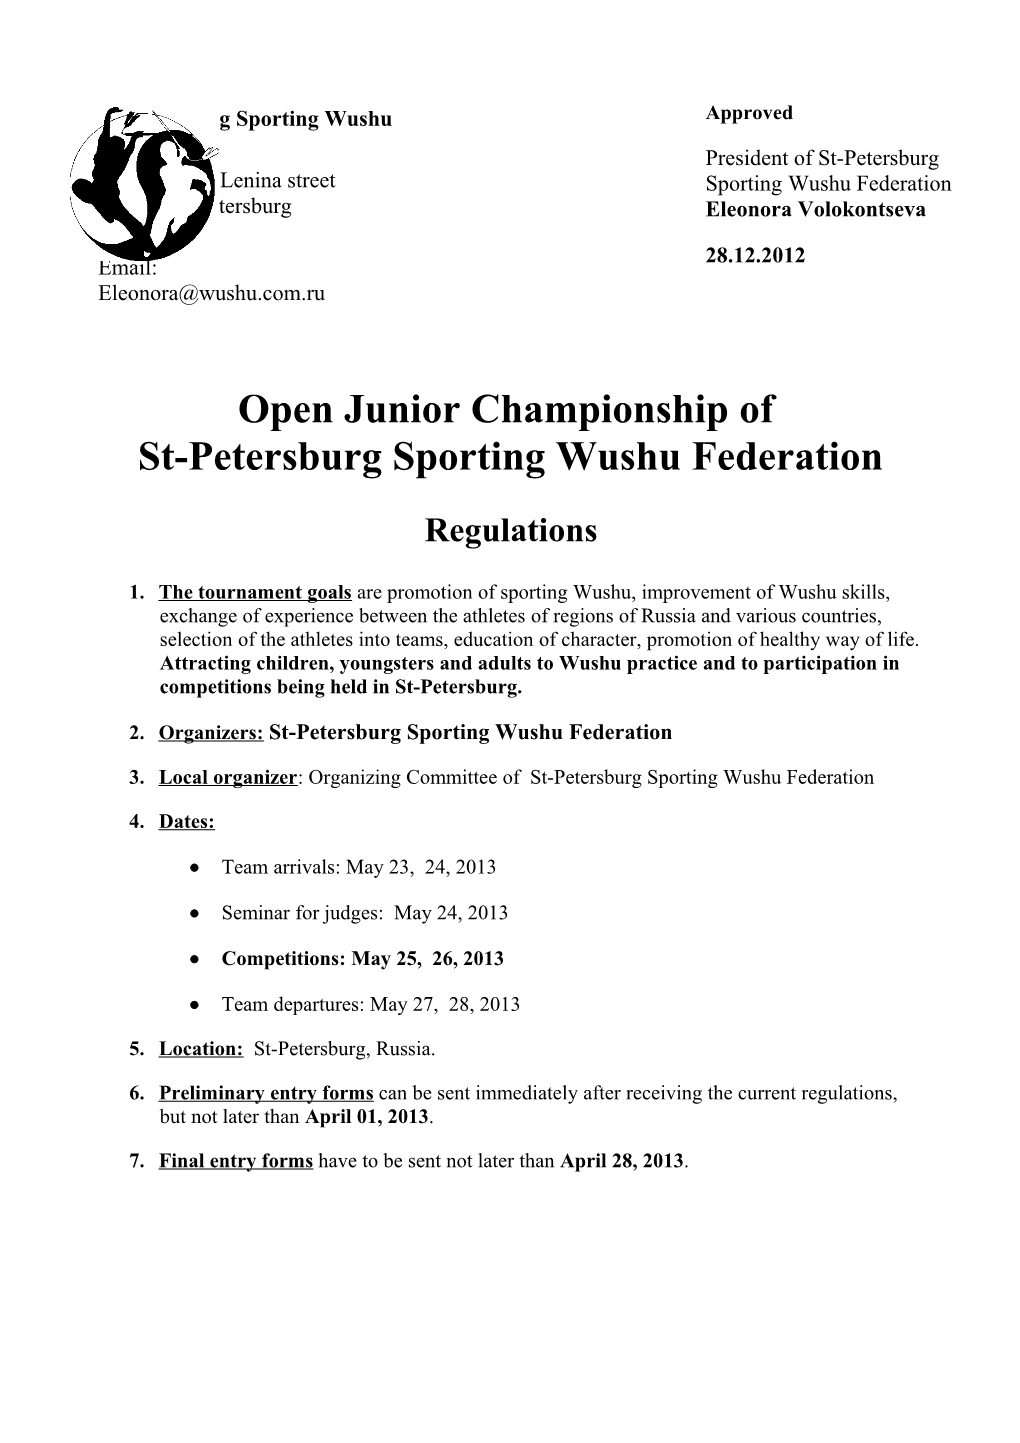 Open Junior Championship of St-Petersburg Sporting Wushu Federation